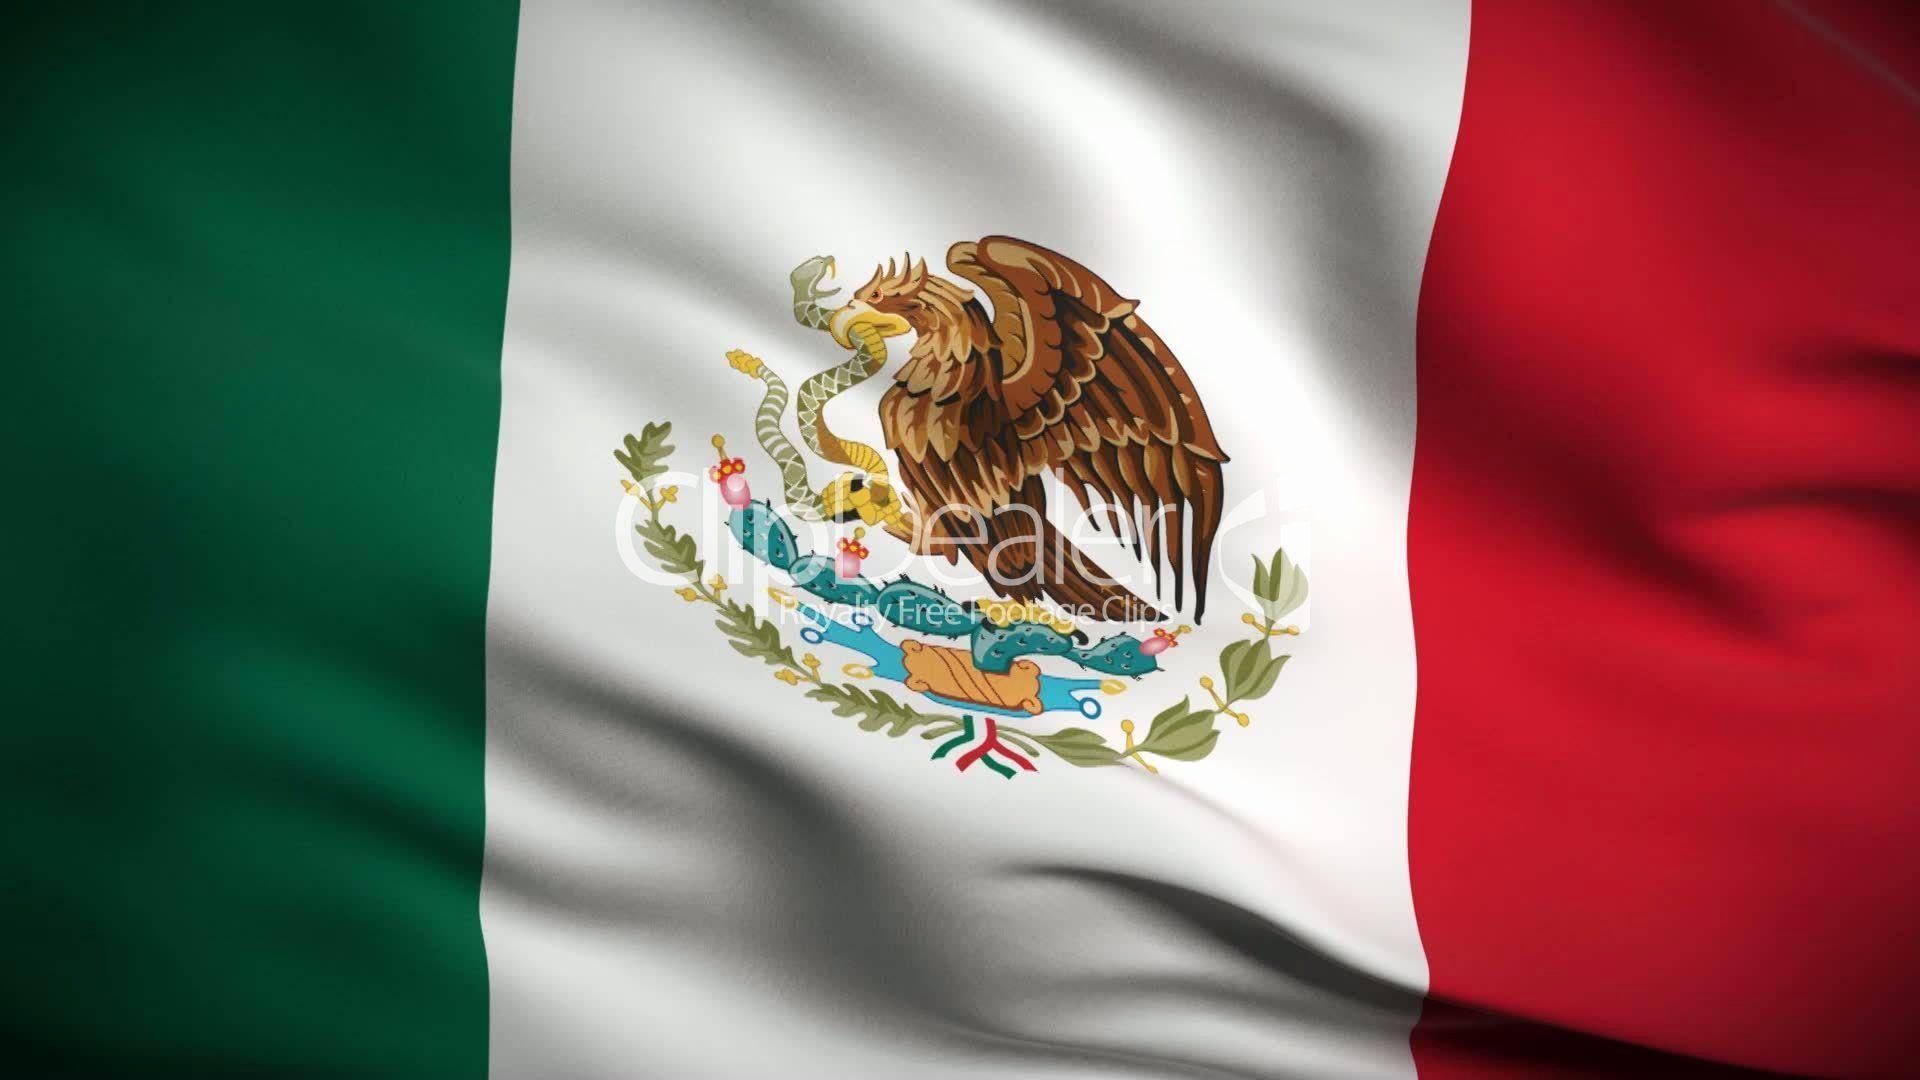 Mexican Flag Wallpaper Beautiful Mexico Flag Wallpaper Screenshot Viva Mexico 2019 of The Hudson